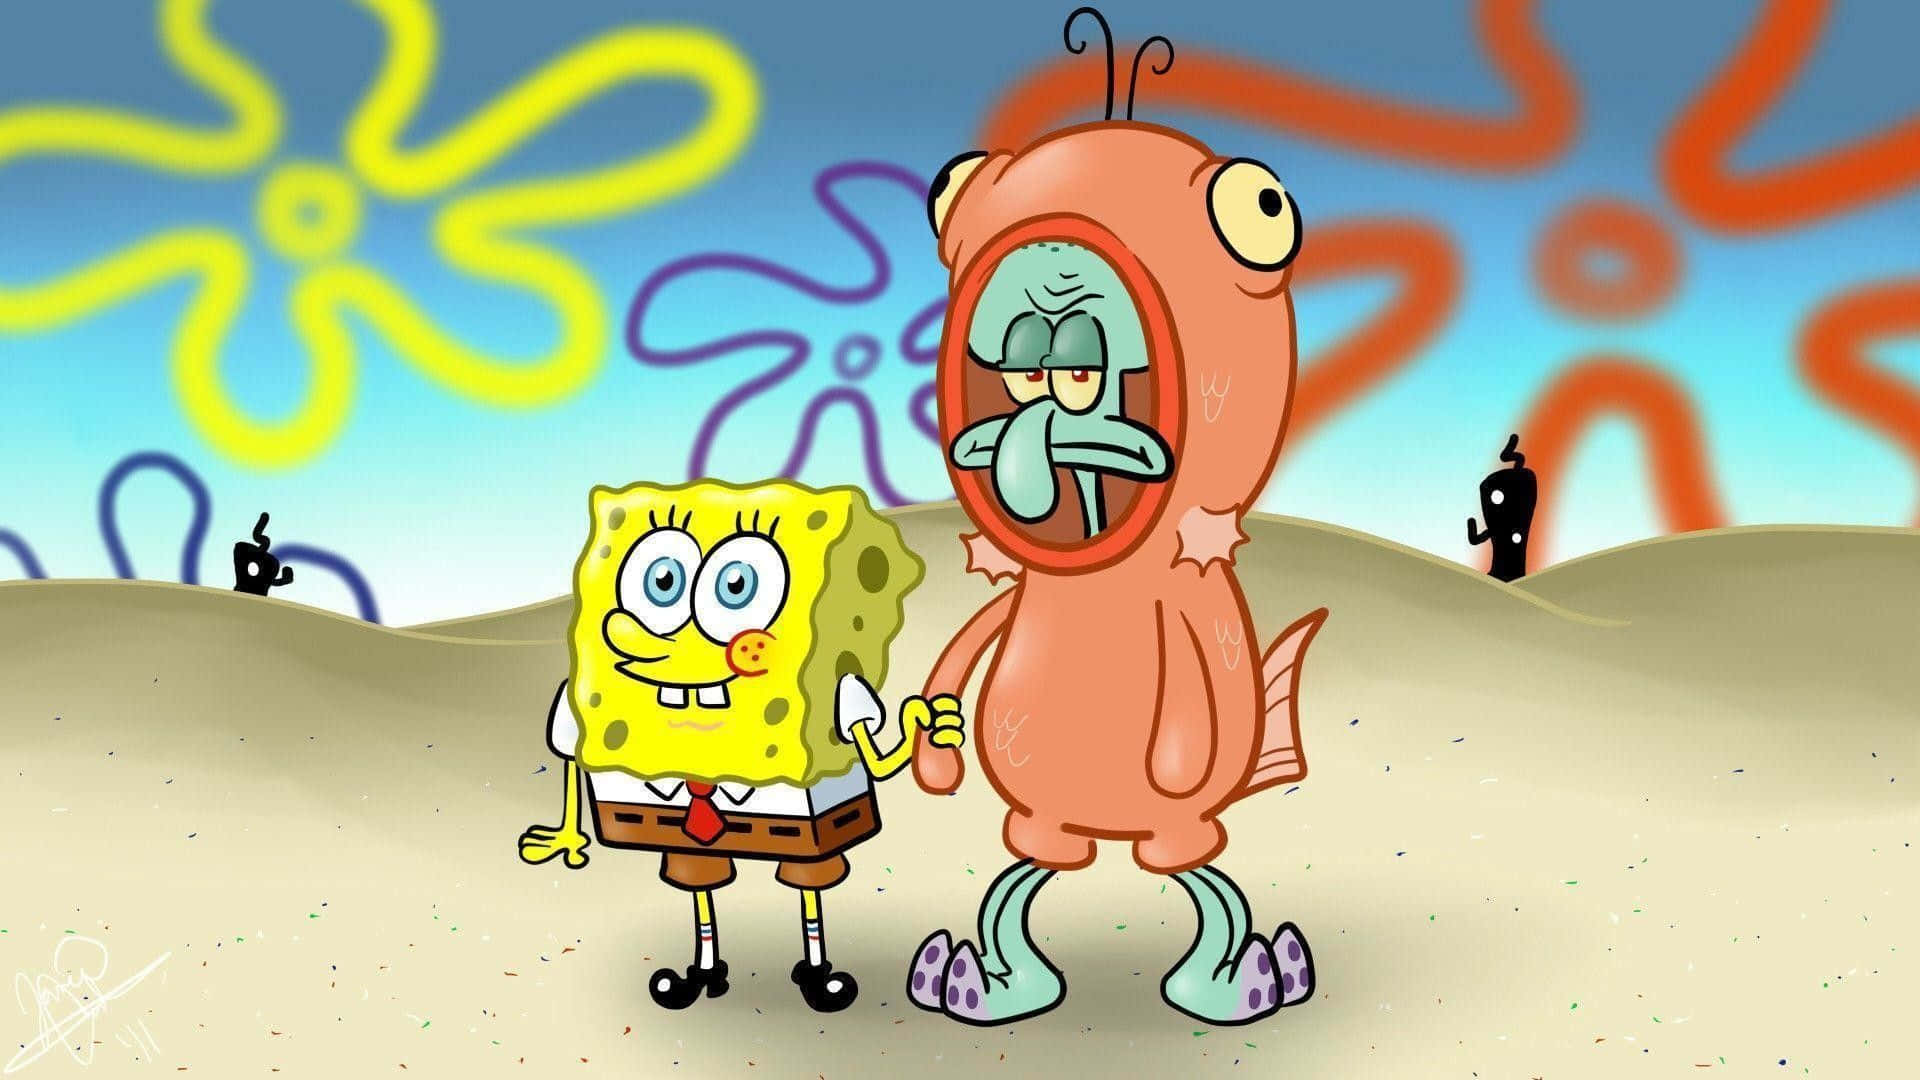 Spongebob Squarepants And A Cartoon Character